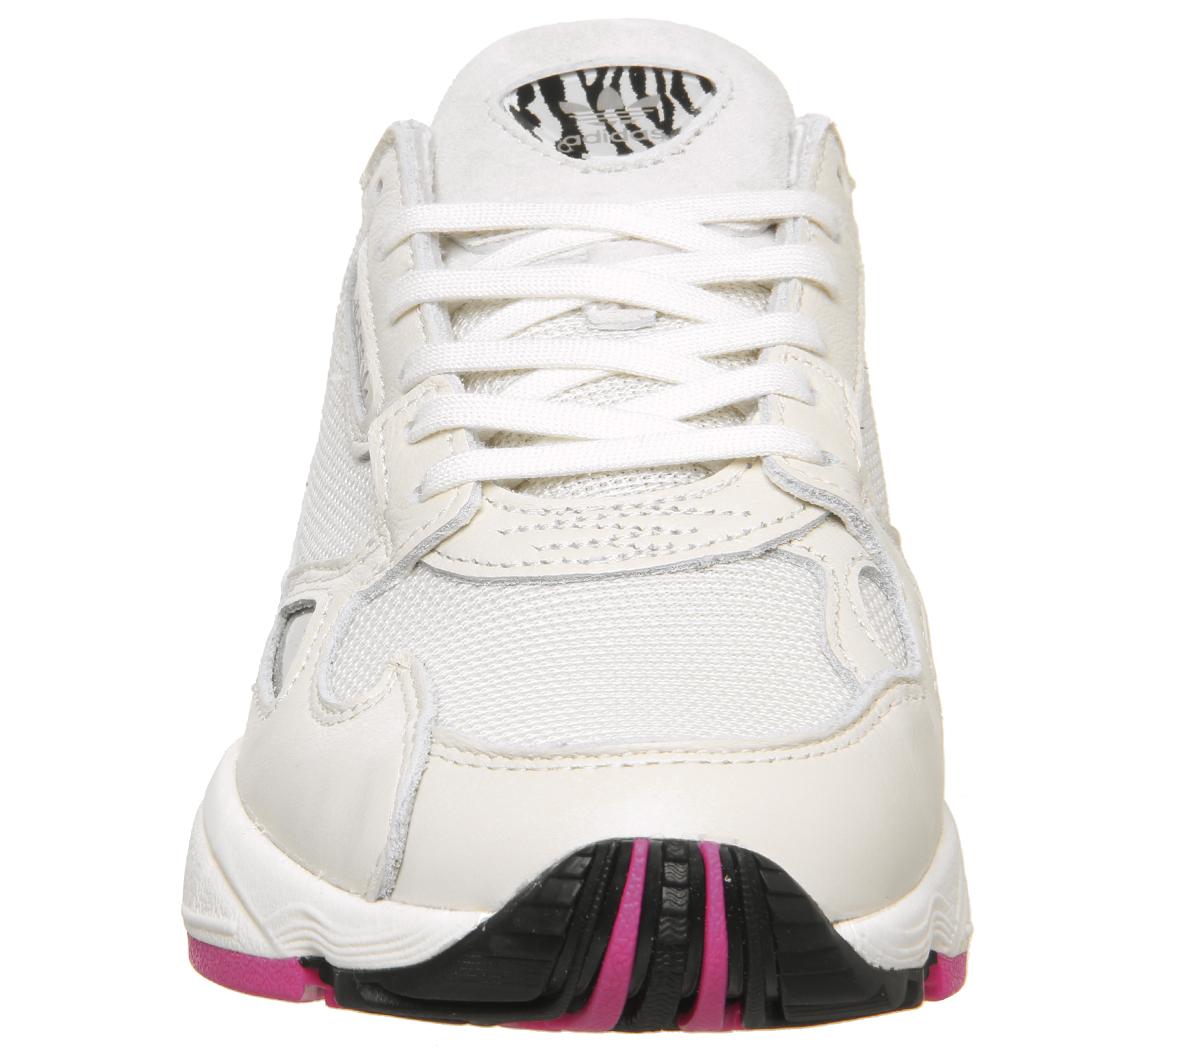 adidas falcon off white shock pink silver animal